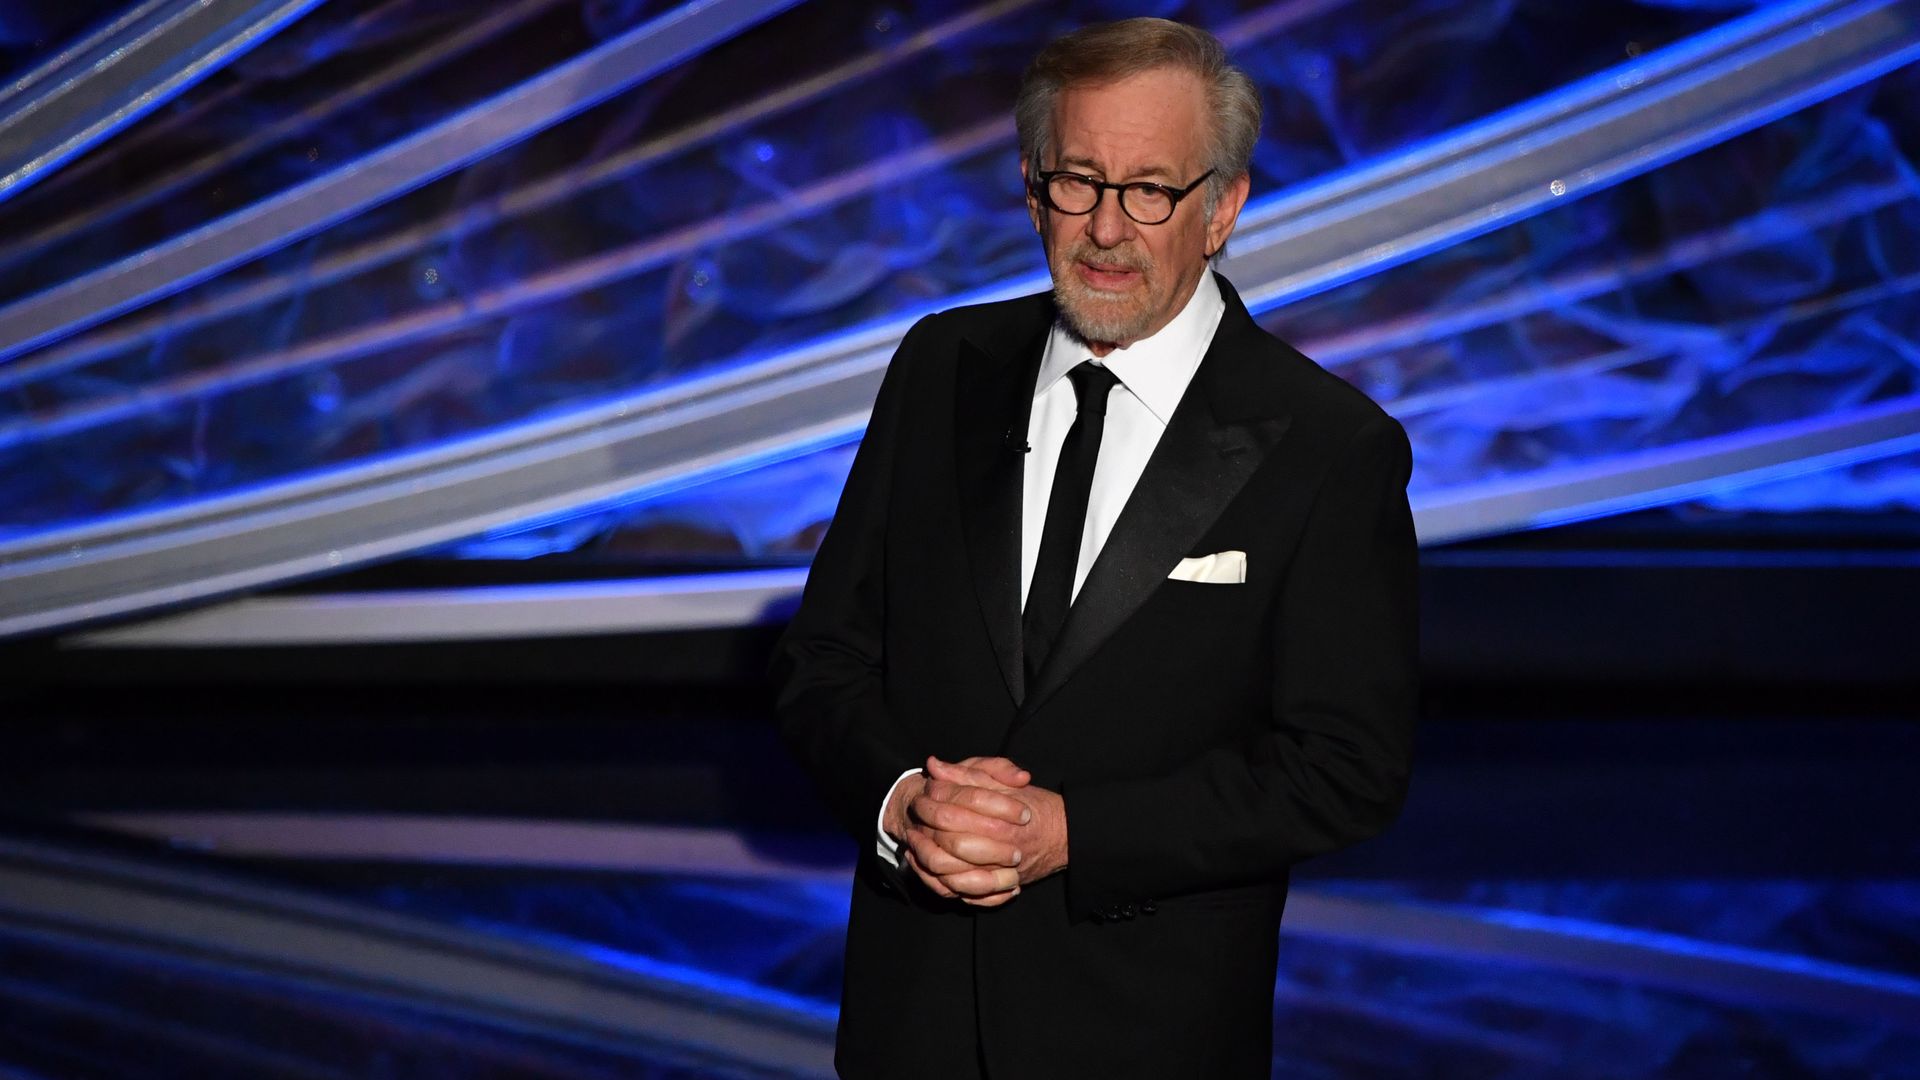 Steven Spielberg speaking during the 2020 Oscars.